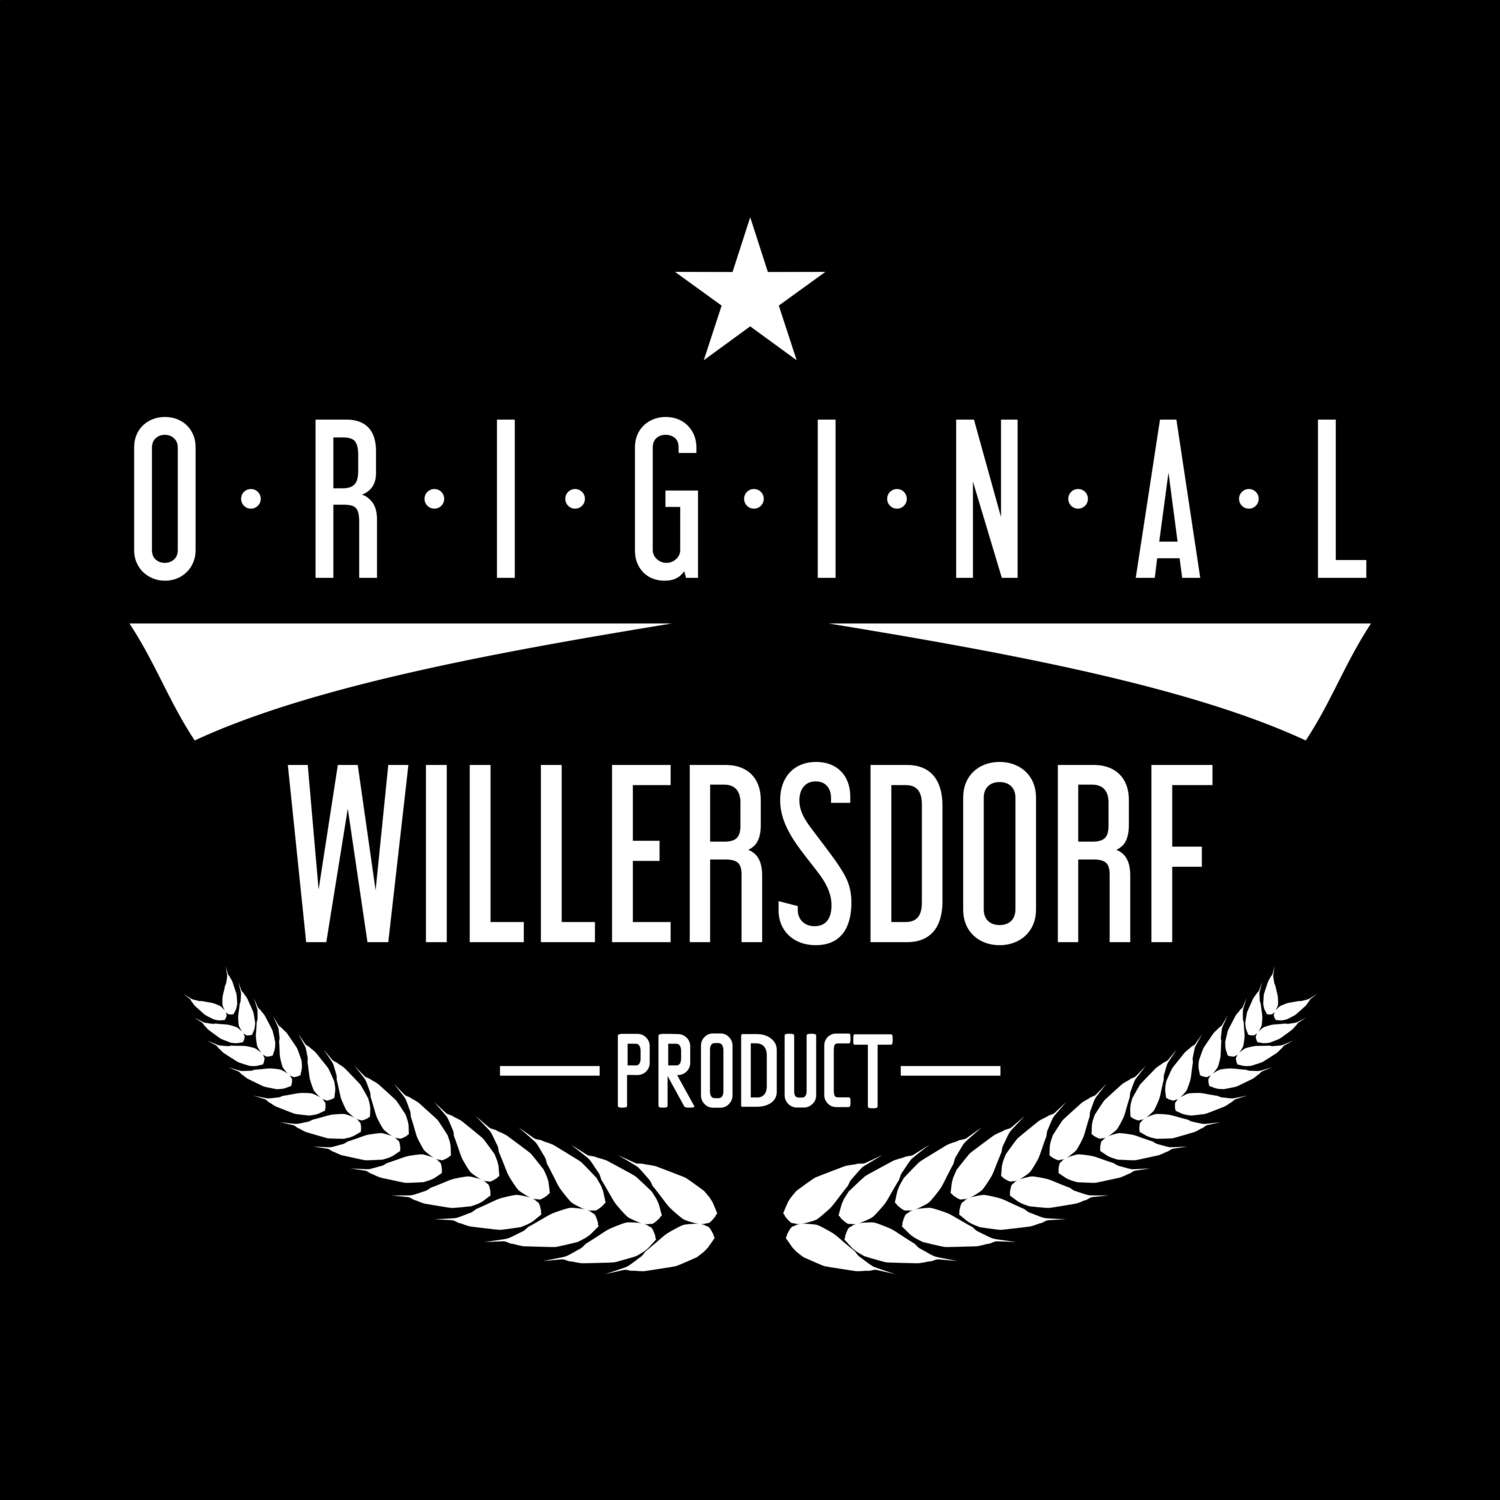 Willersdorf T-Shirt »Original Product«